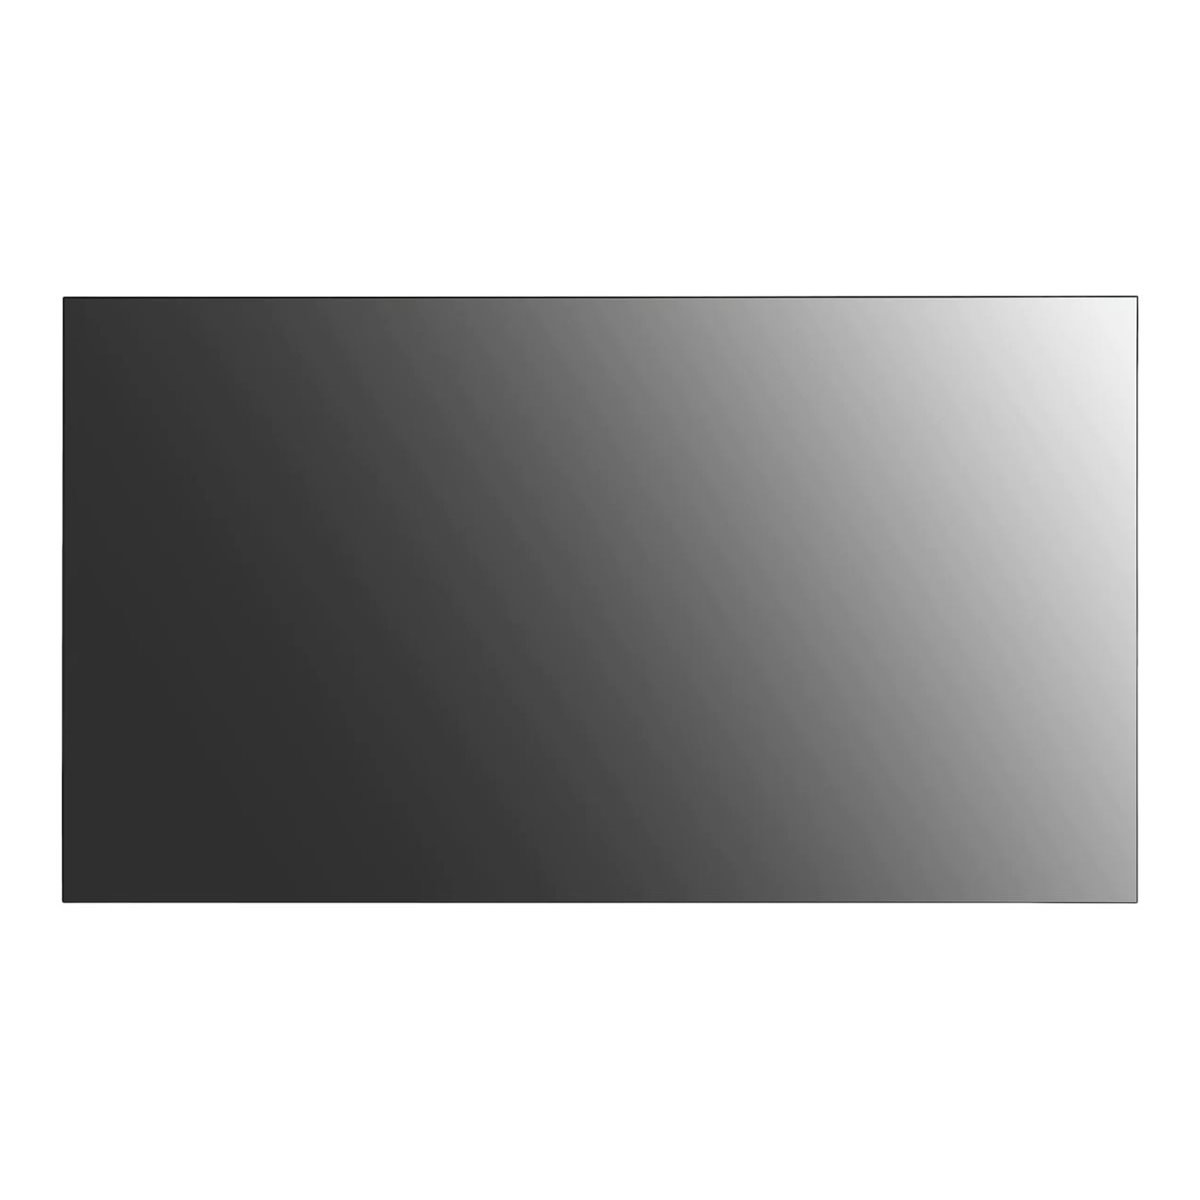 LG 49VL5G-A - Digital signage flat panel - 124.5 cm (49) - IPS - 1920 x 1080 pixels